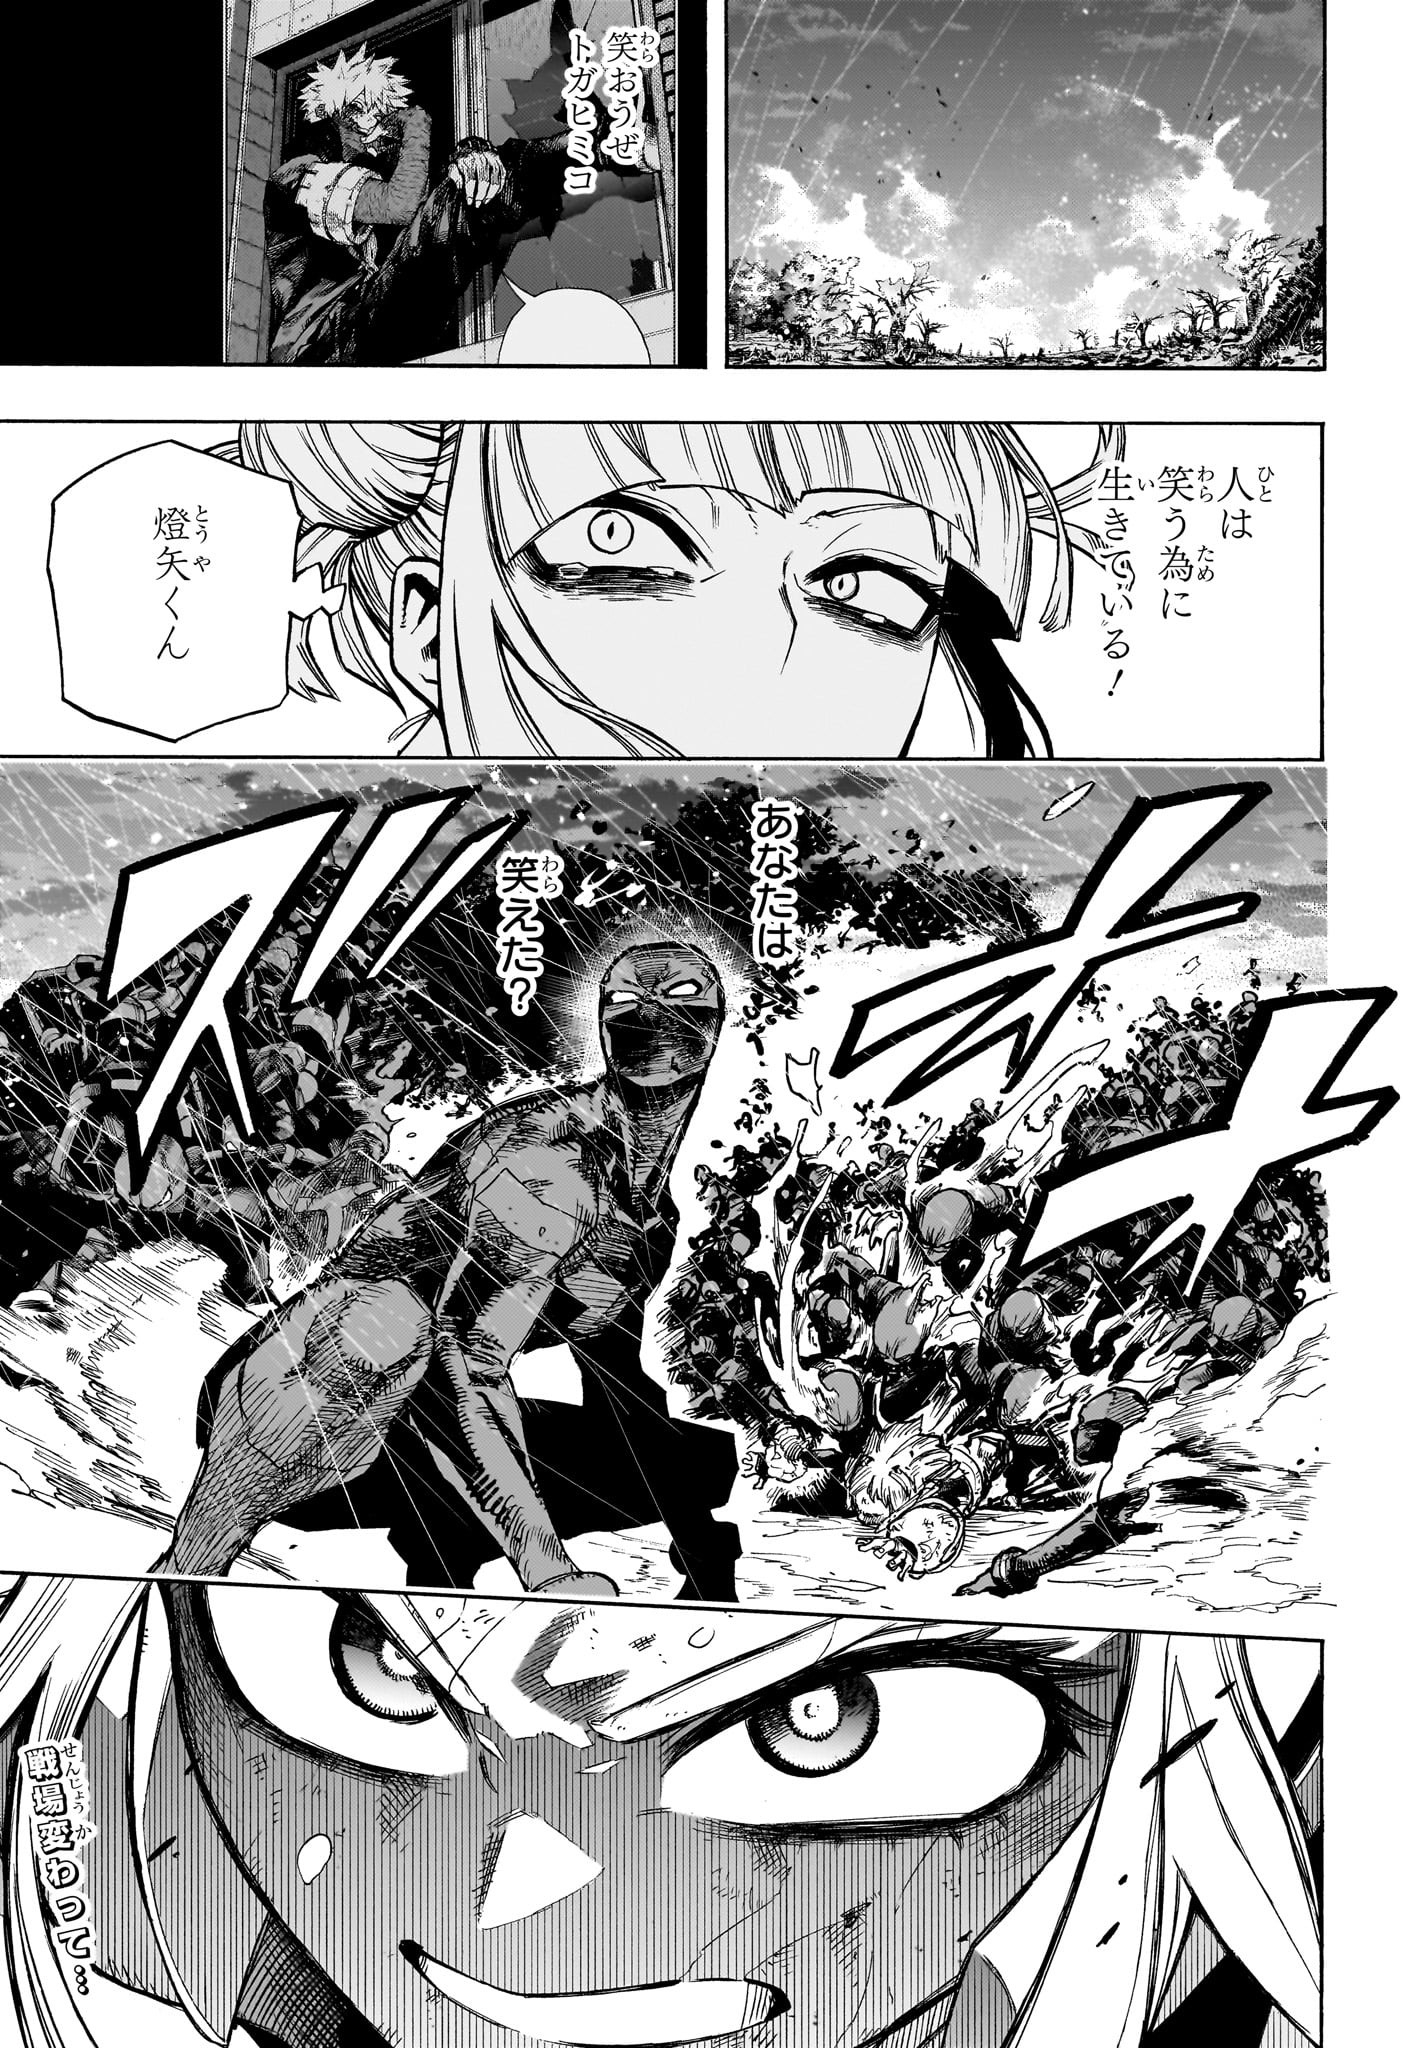 Boku no Hero Academia - Chapter 390 - Page 13